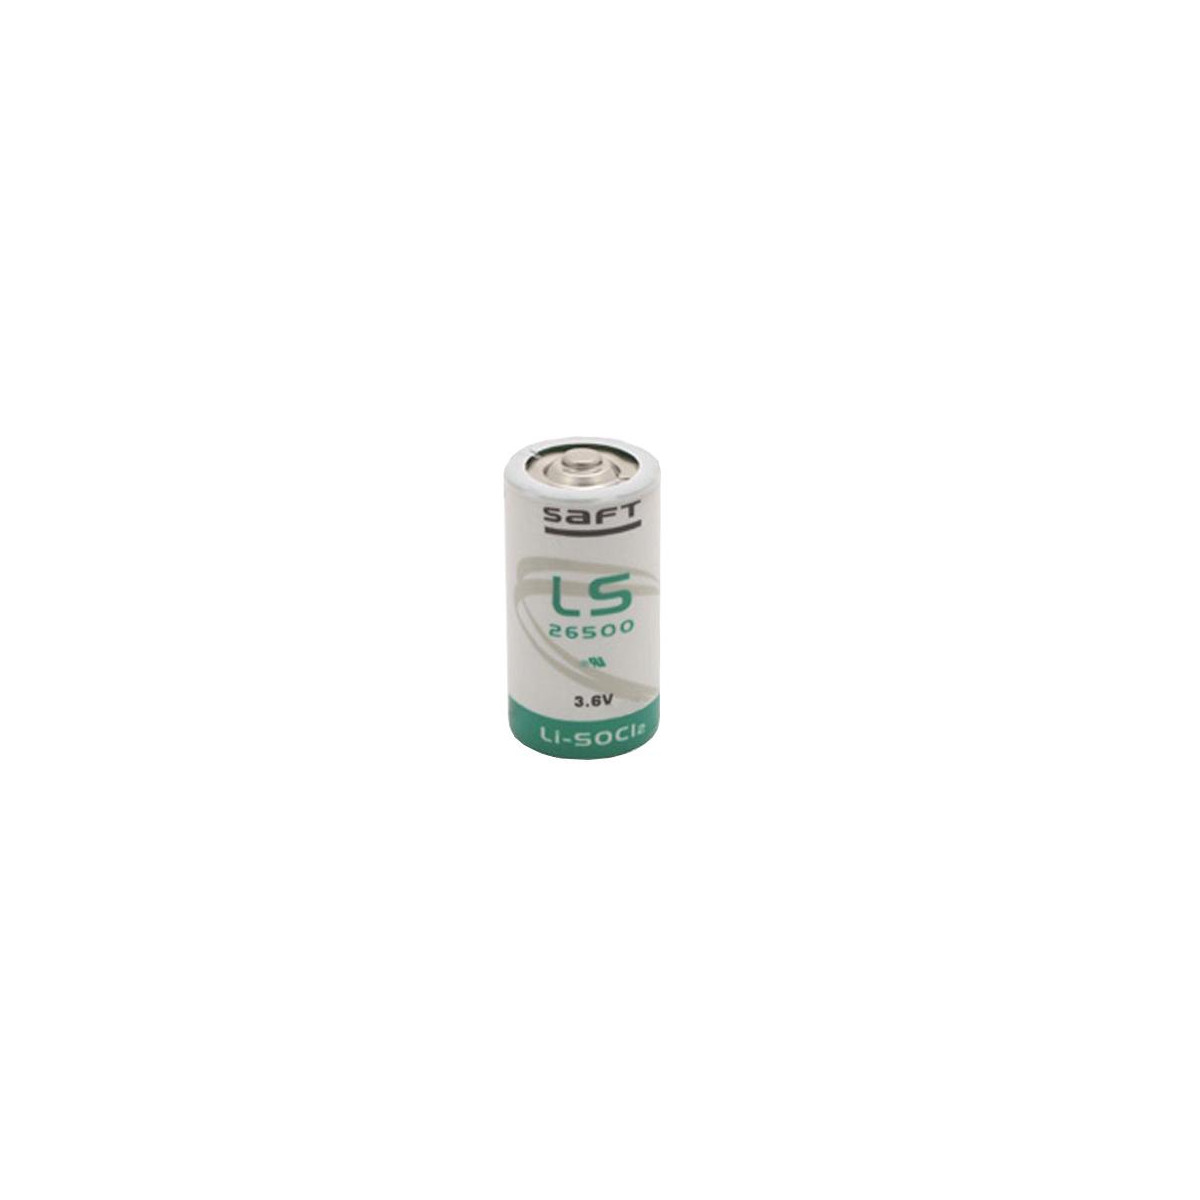 Baterie lithiová LS 26500 3,6V/ 7700mAh STD SAFT